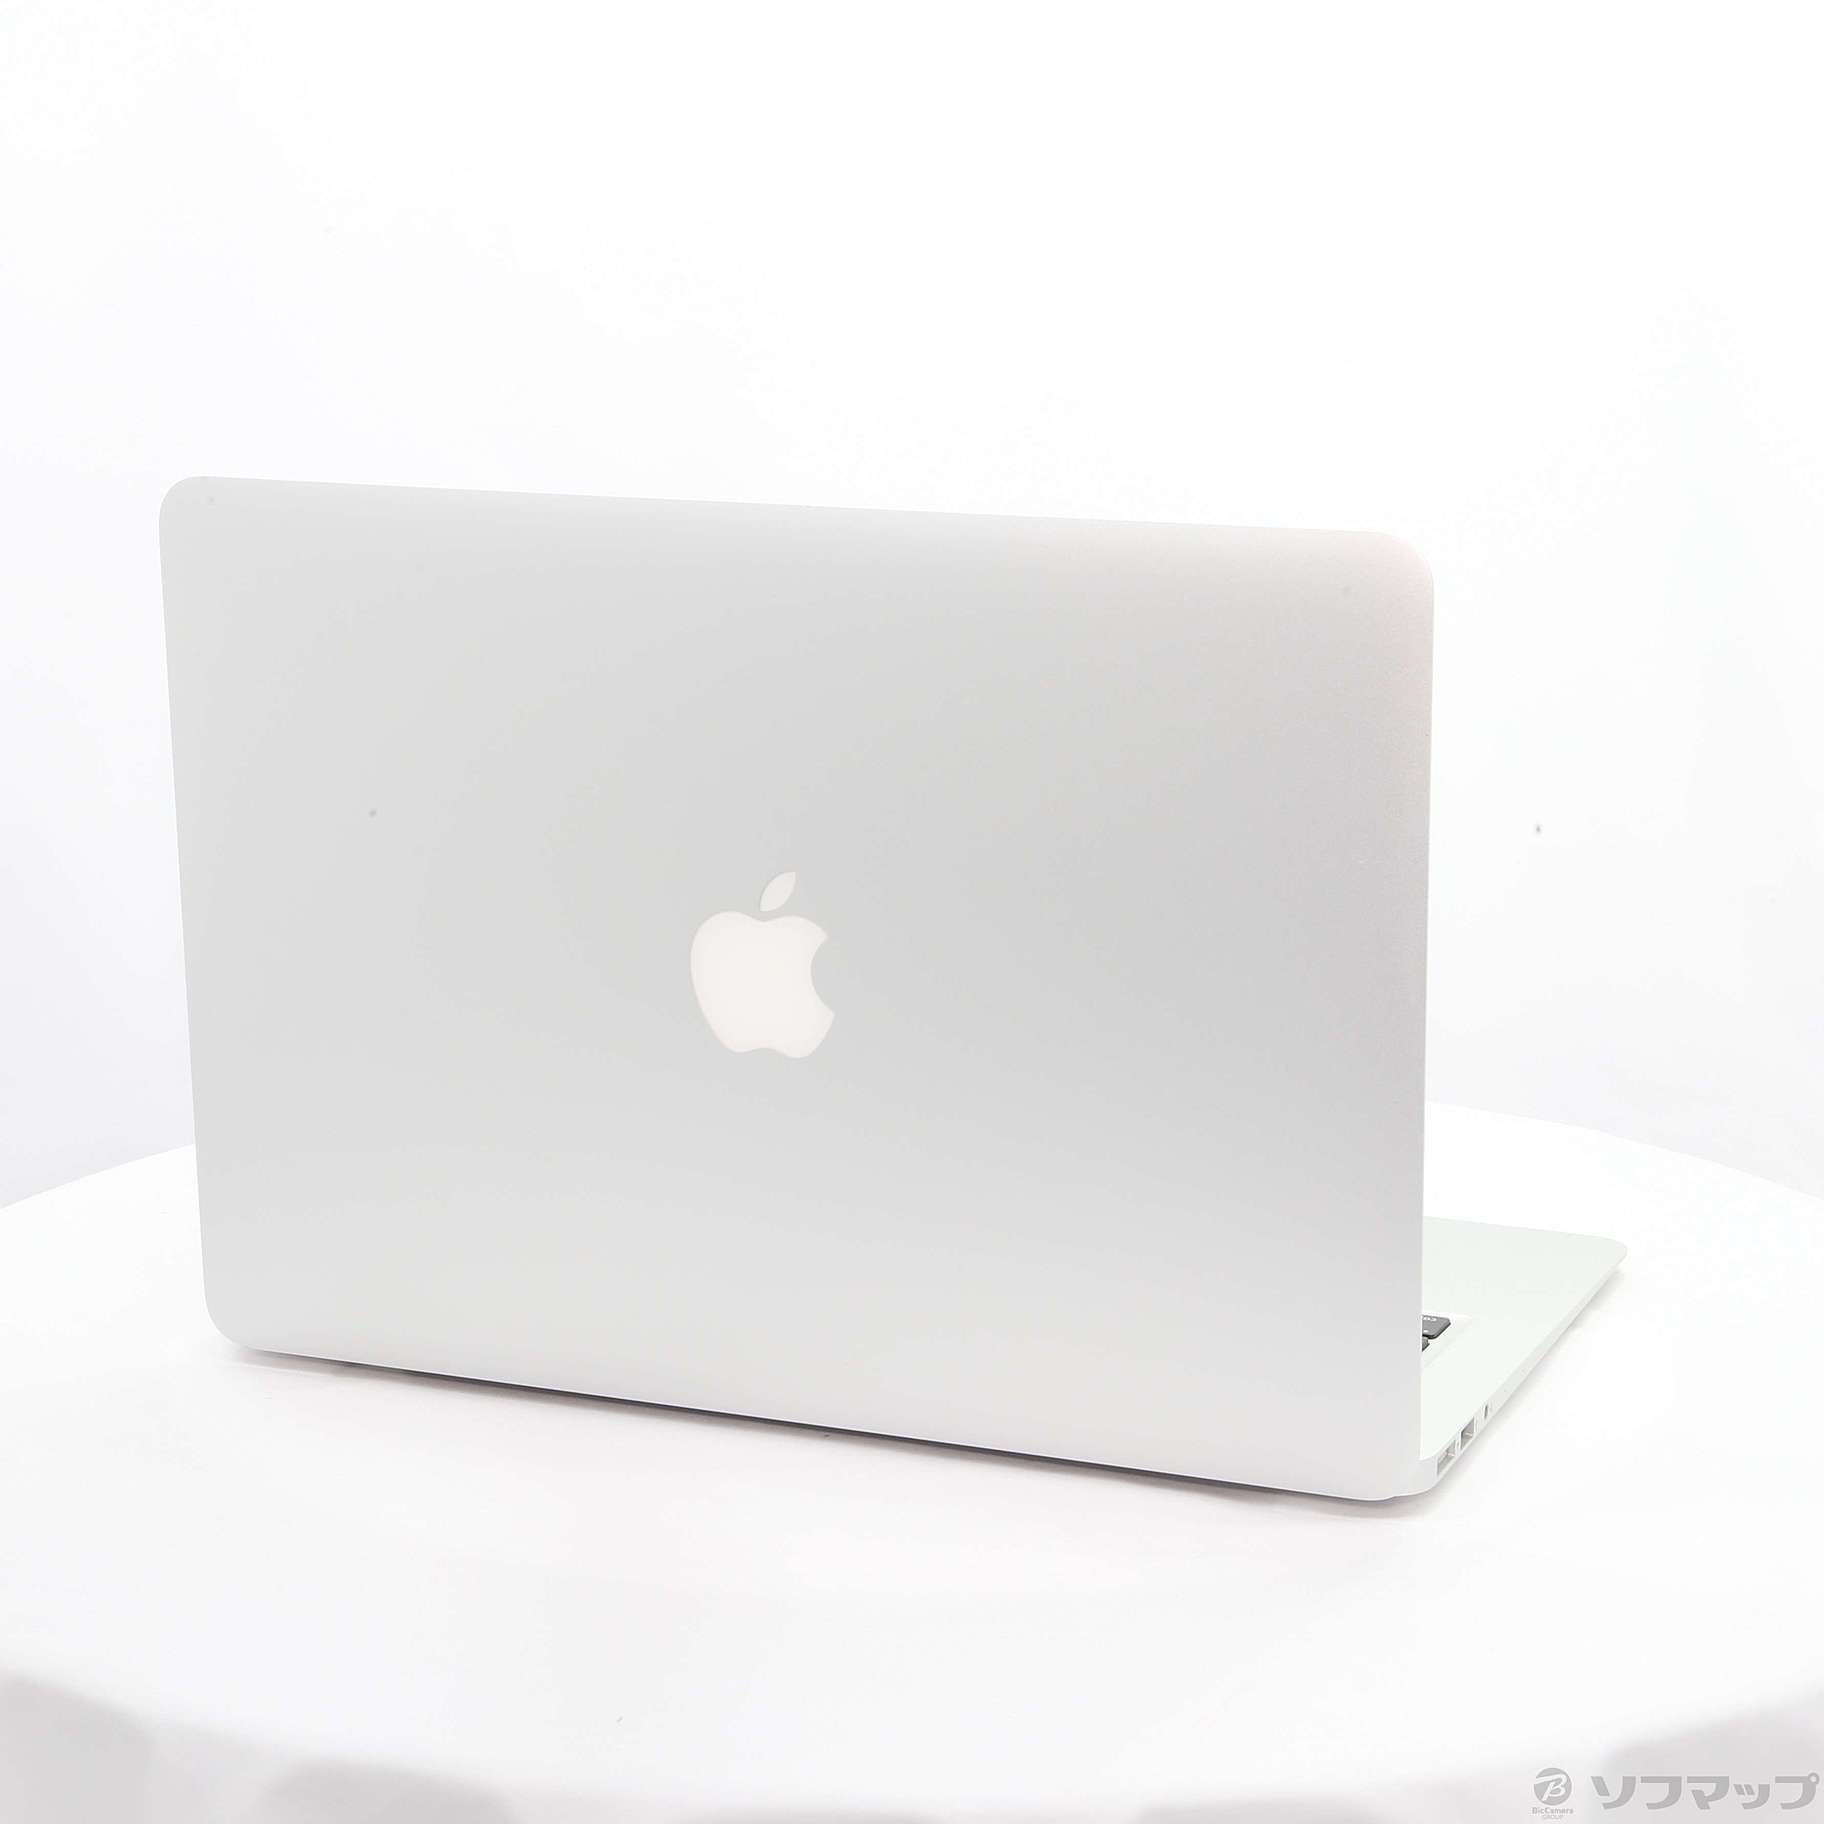 MacBookAir 2014 Corei7 メモリ8GB SSD256GB